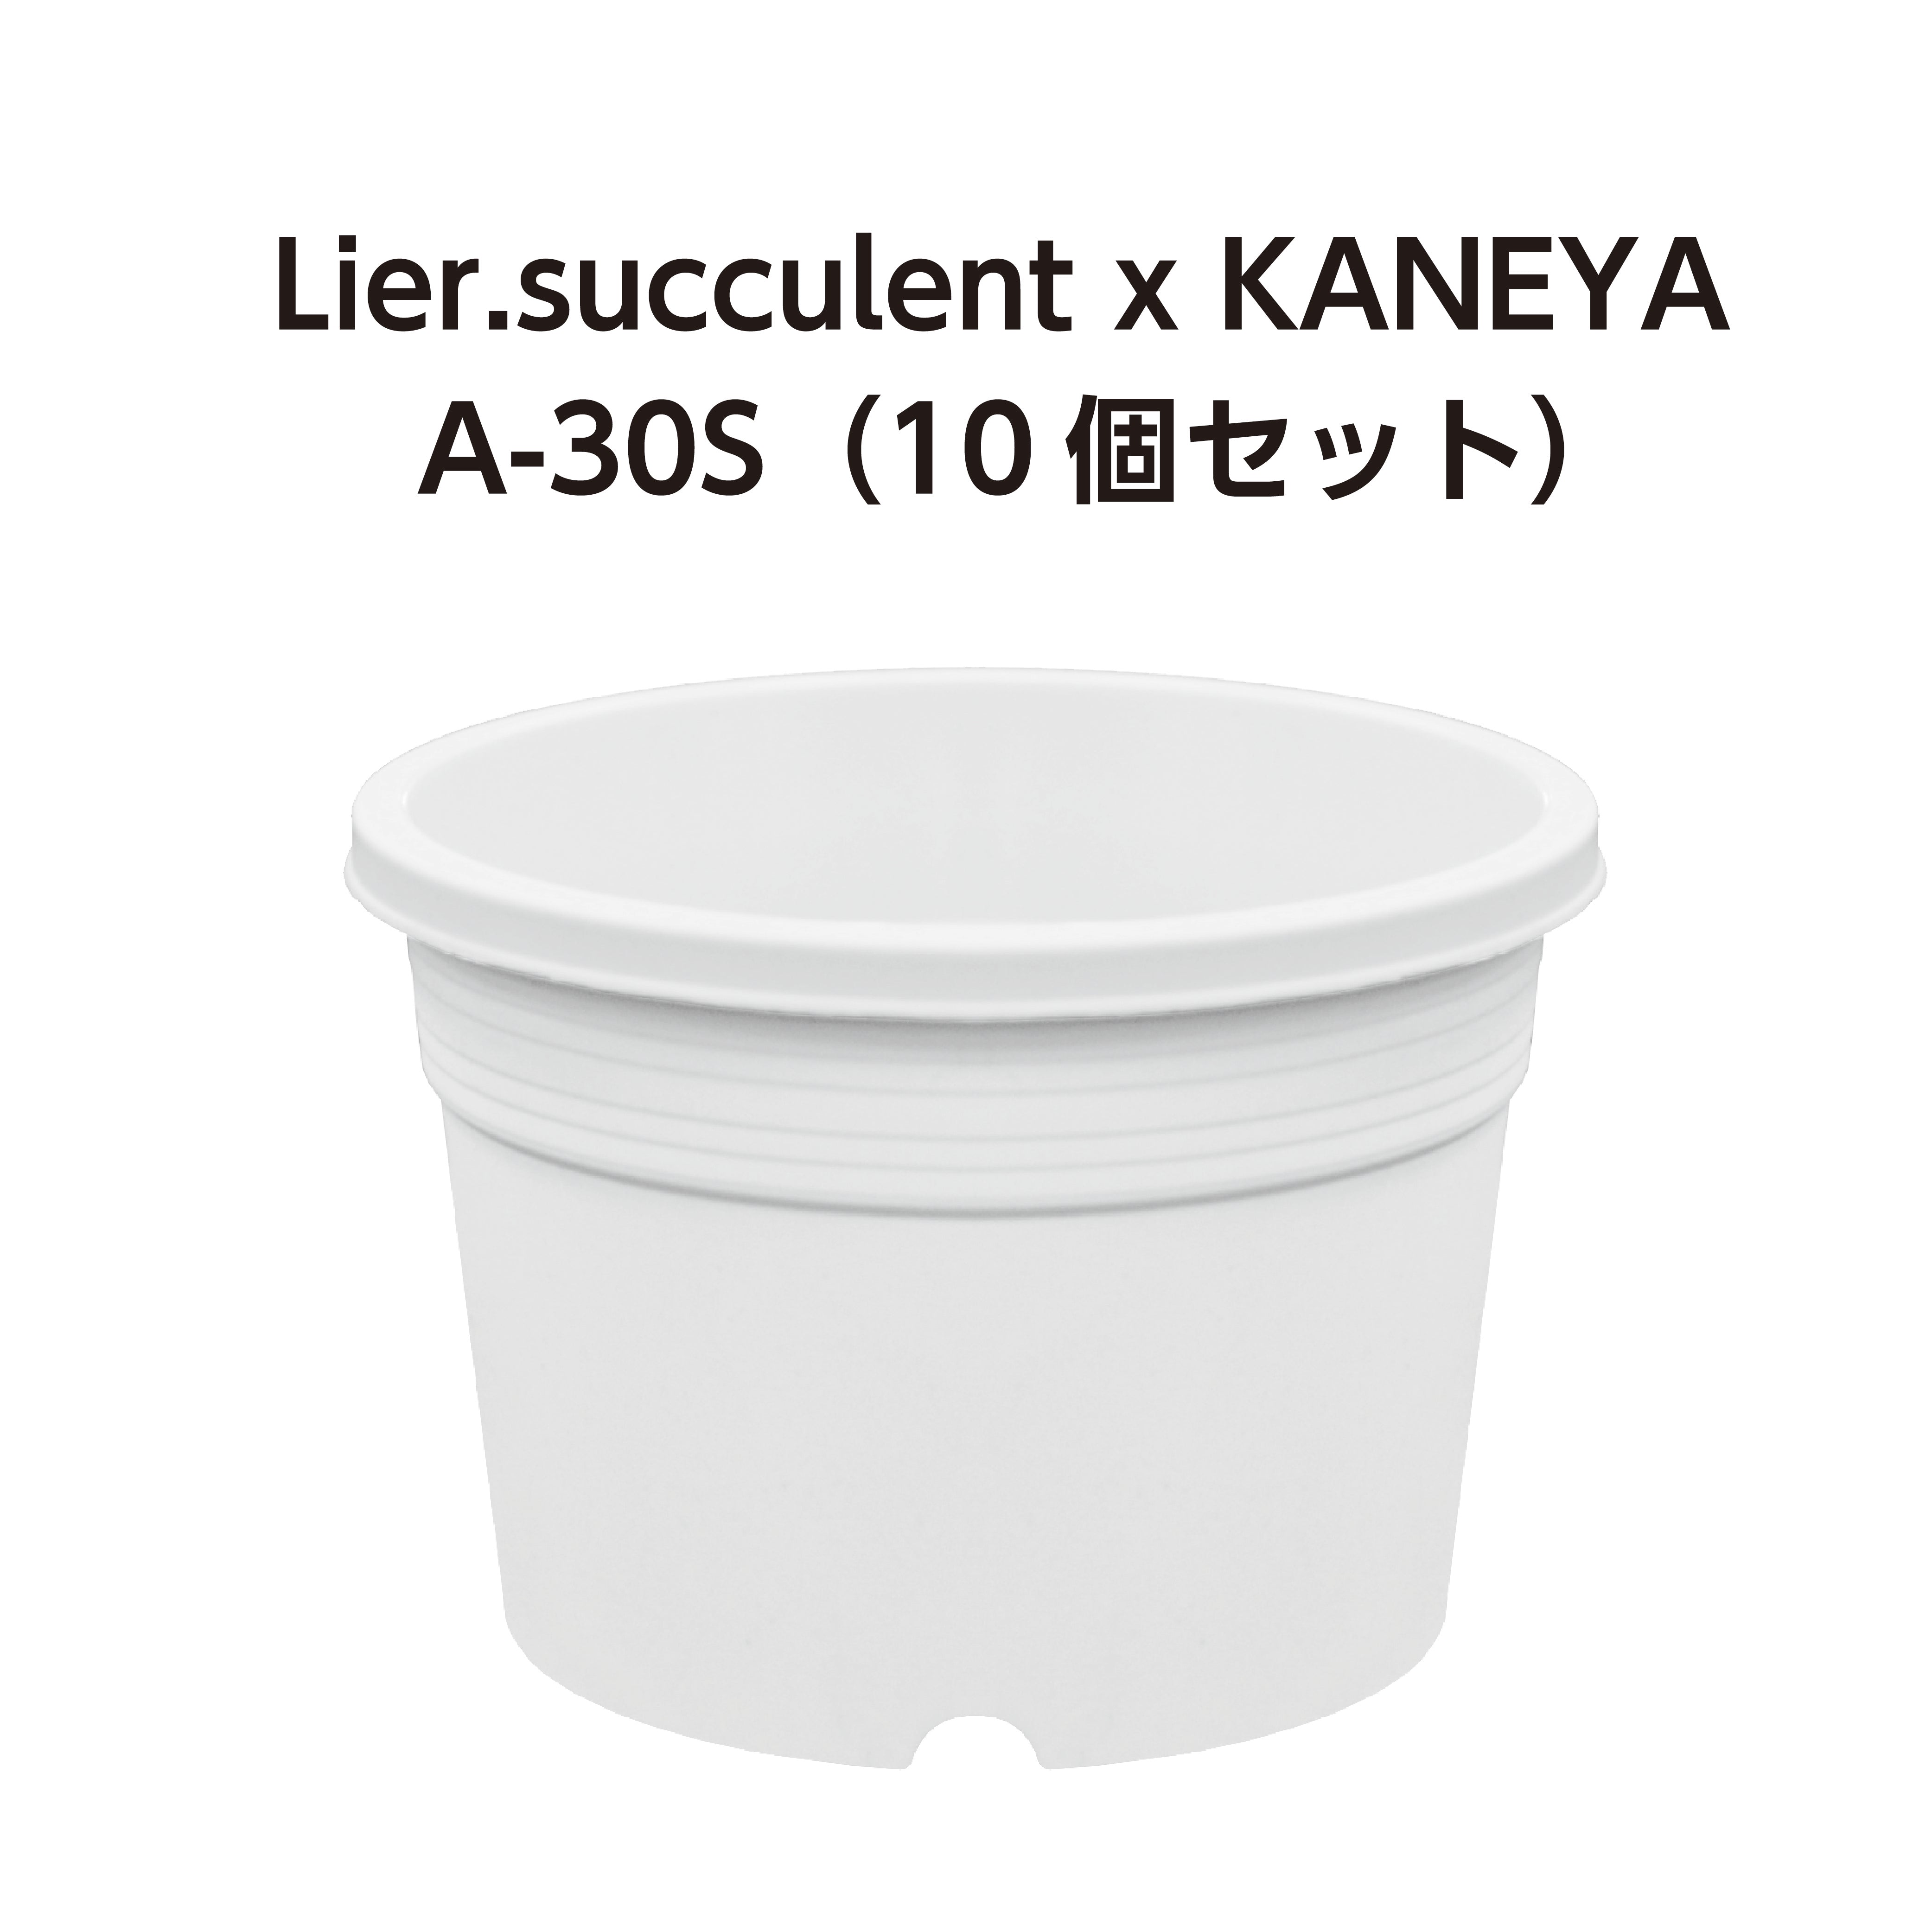 A-30S 白 10個セット  (3号鉢) (リエールサキュレントコラボ商品)